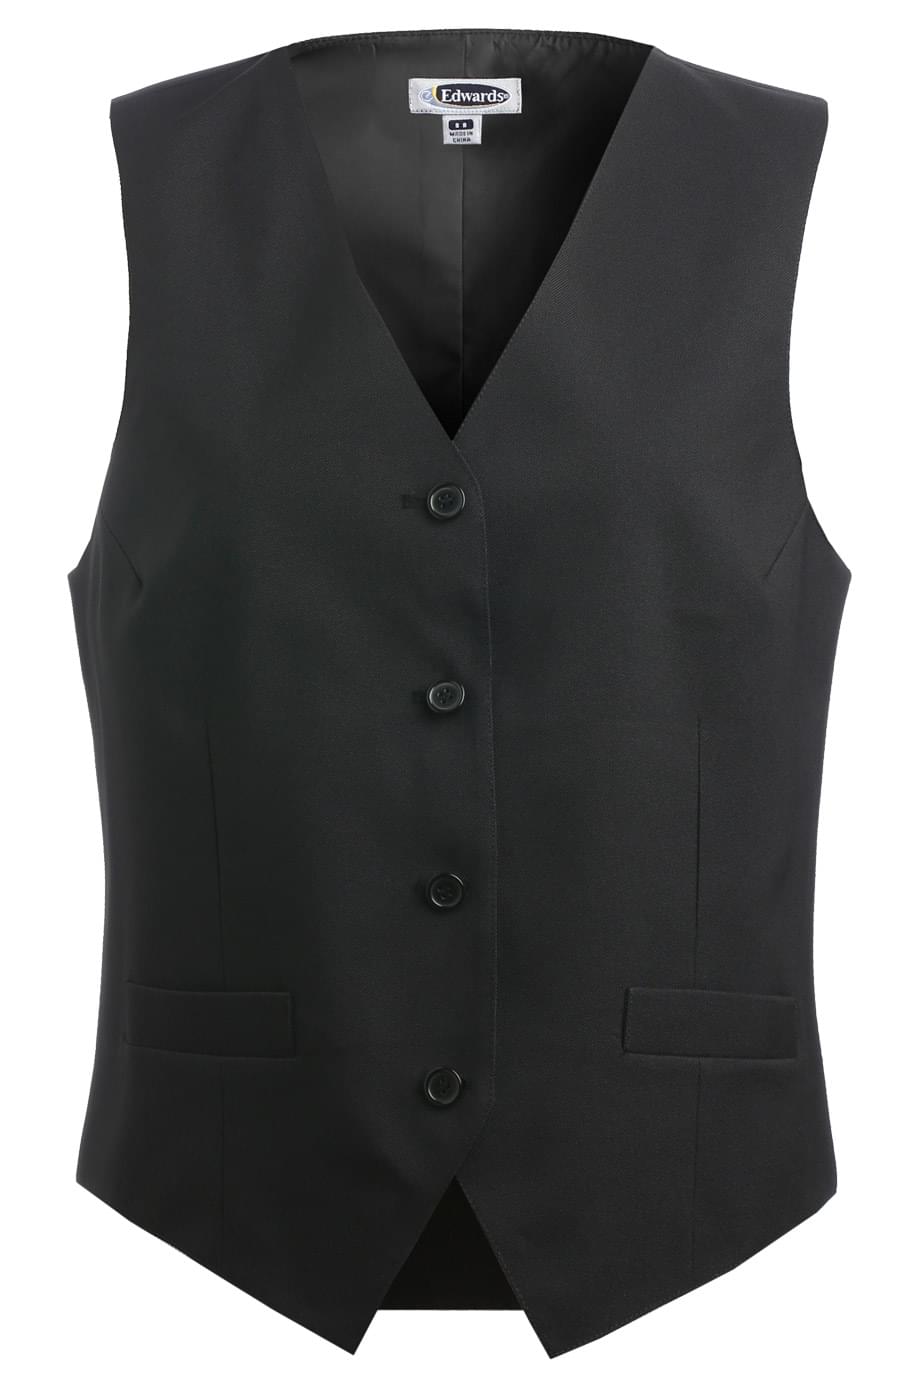 Edwards XS Ladies' Black Essential Polyester Vest (4 Buttons)